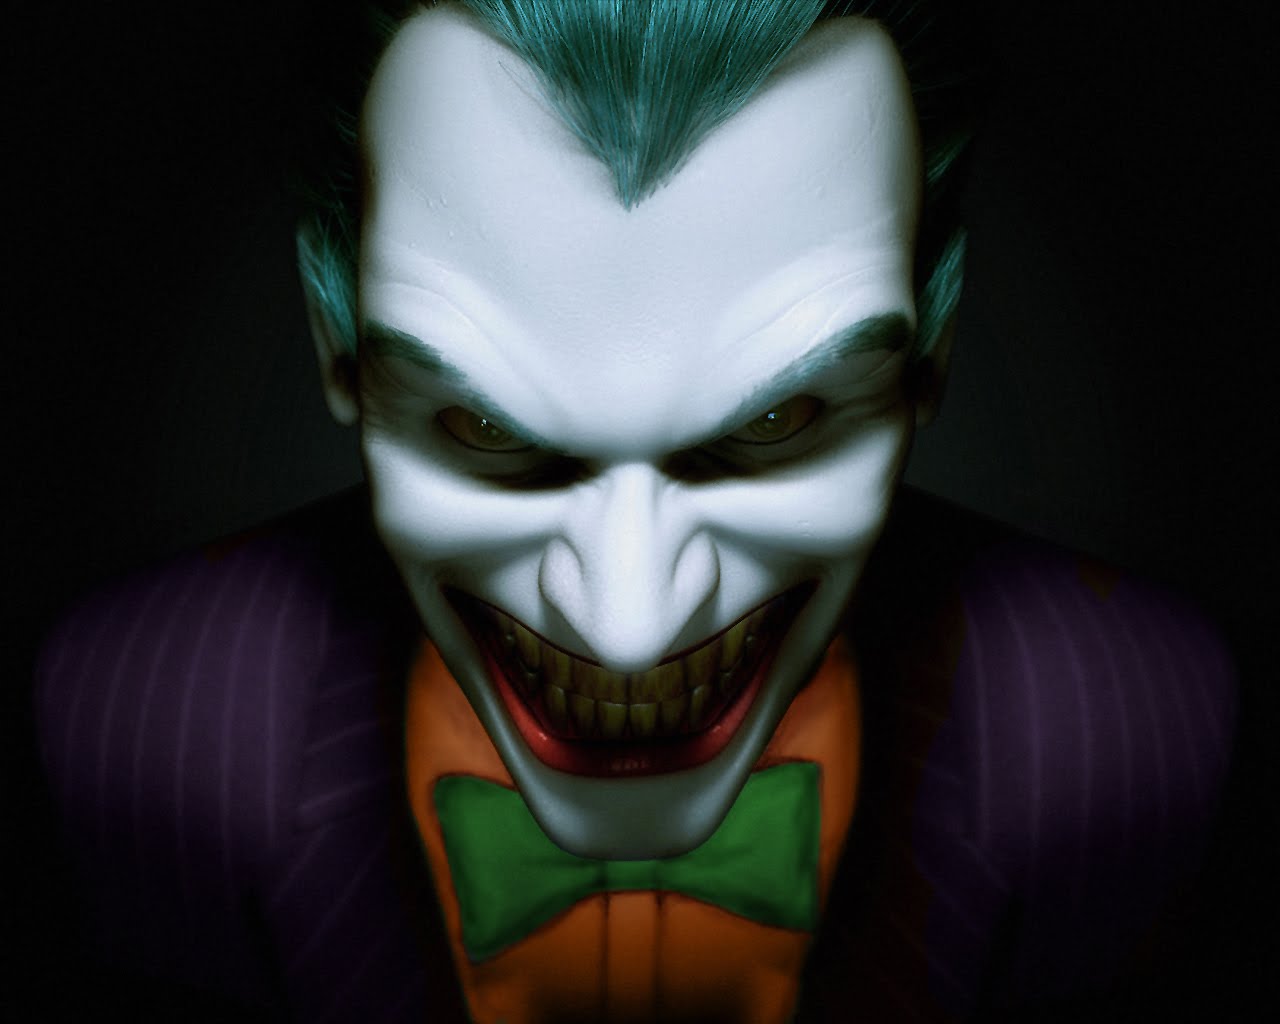  Joker  photos images Desktop wallpapers  1280x1024